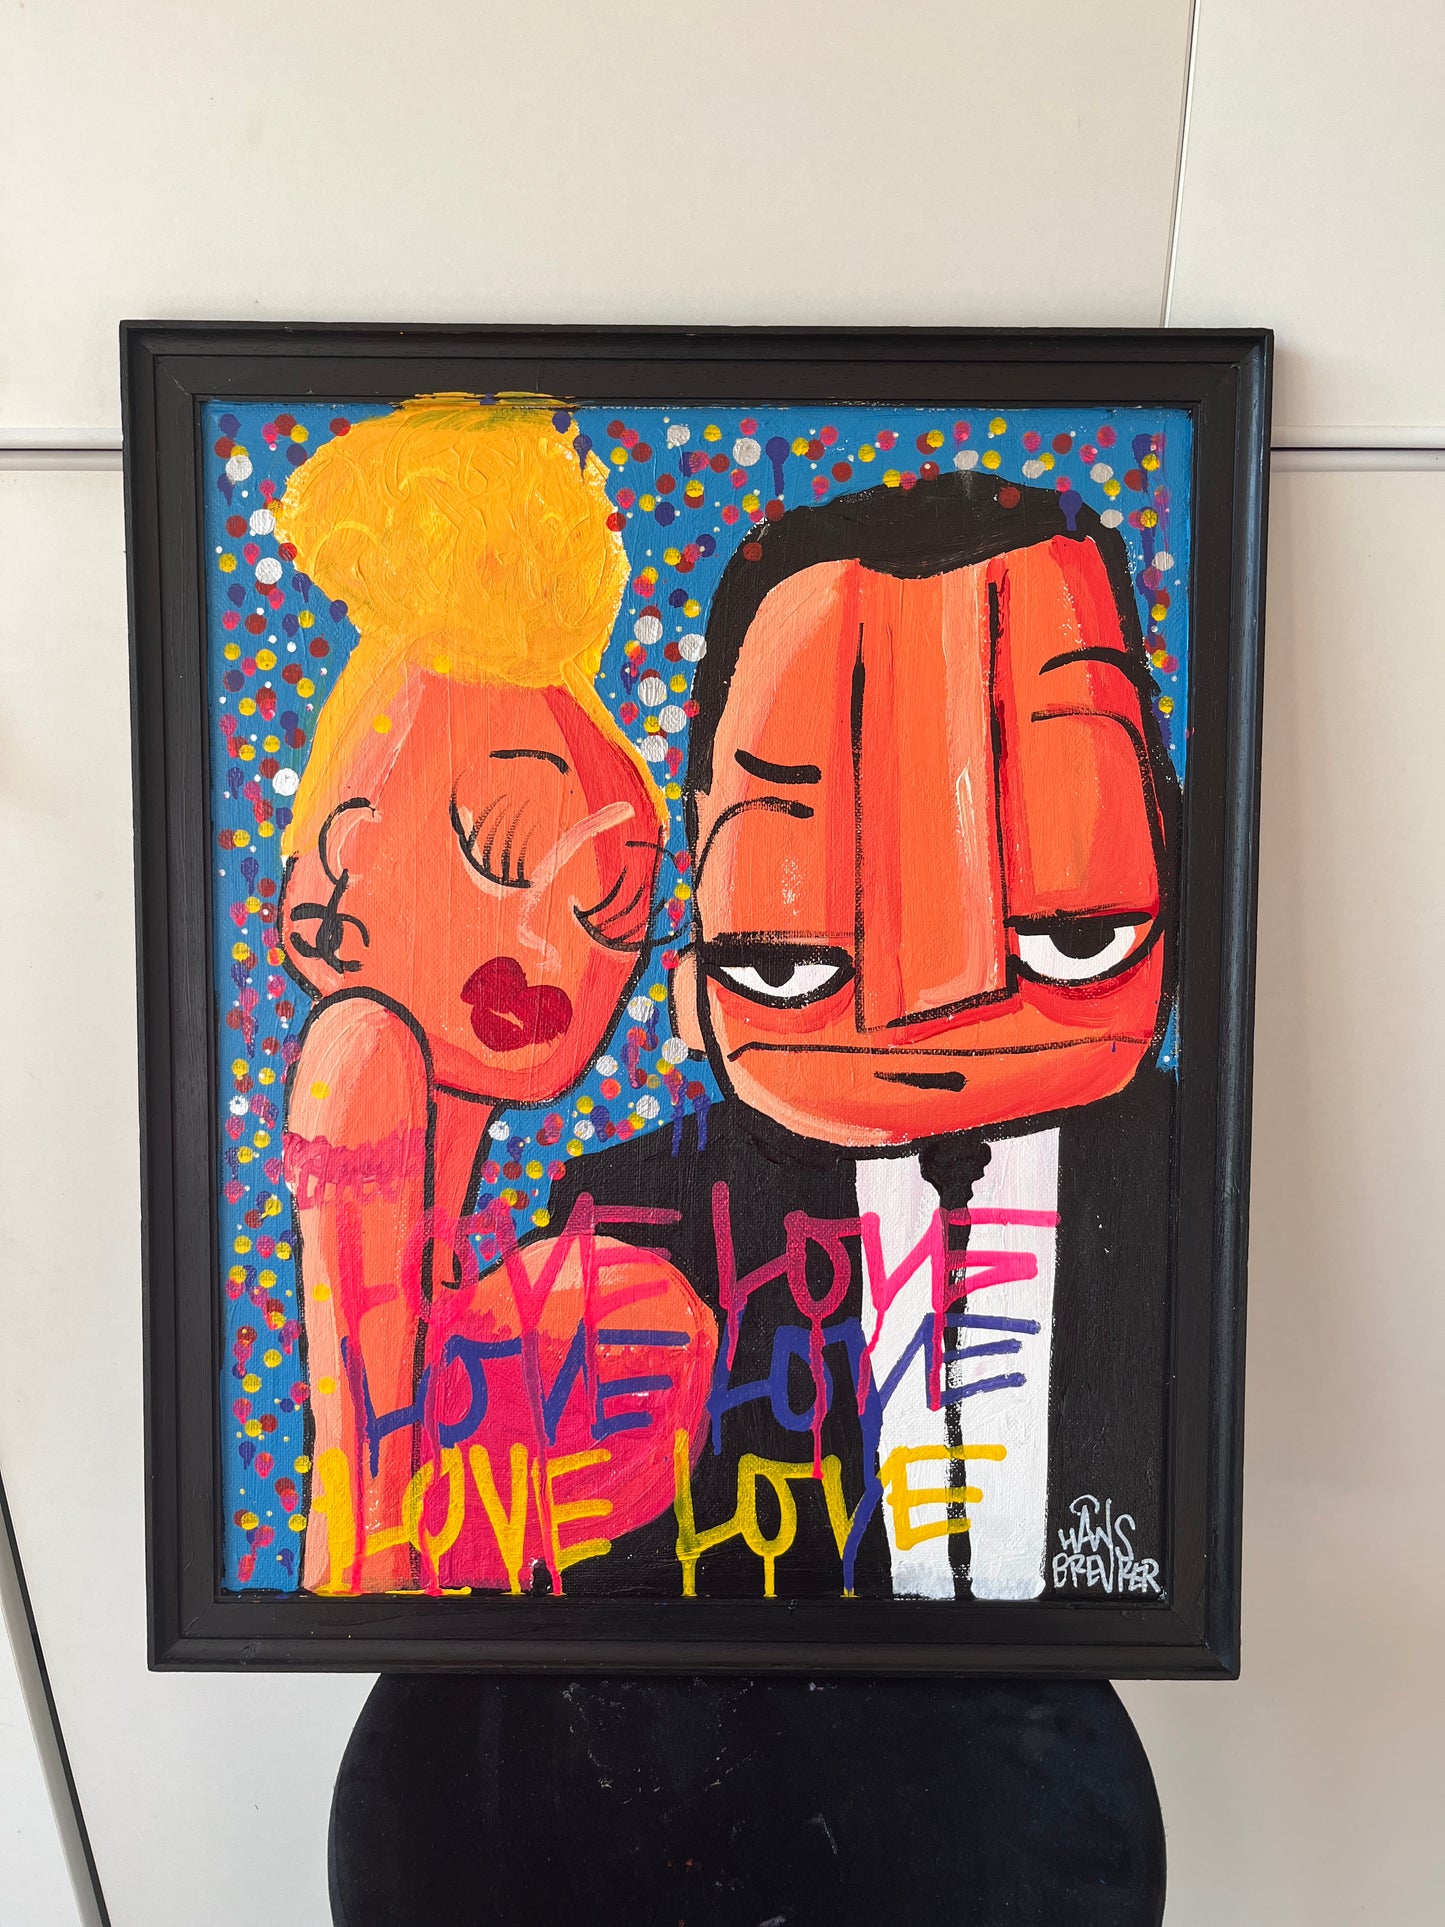 Bonny & Clyde love love love 58 x 48 cm